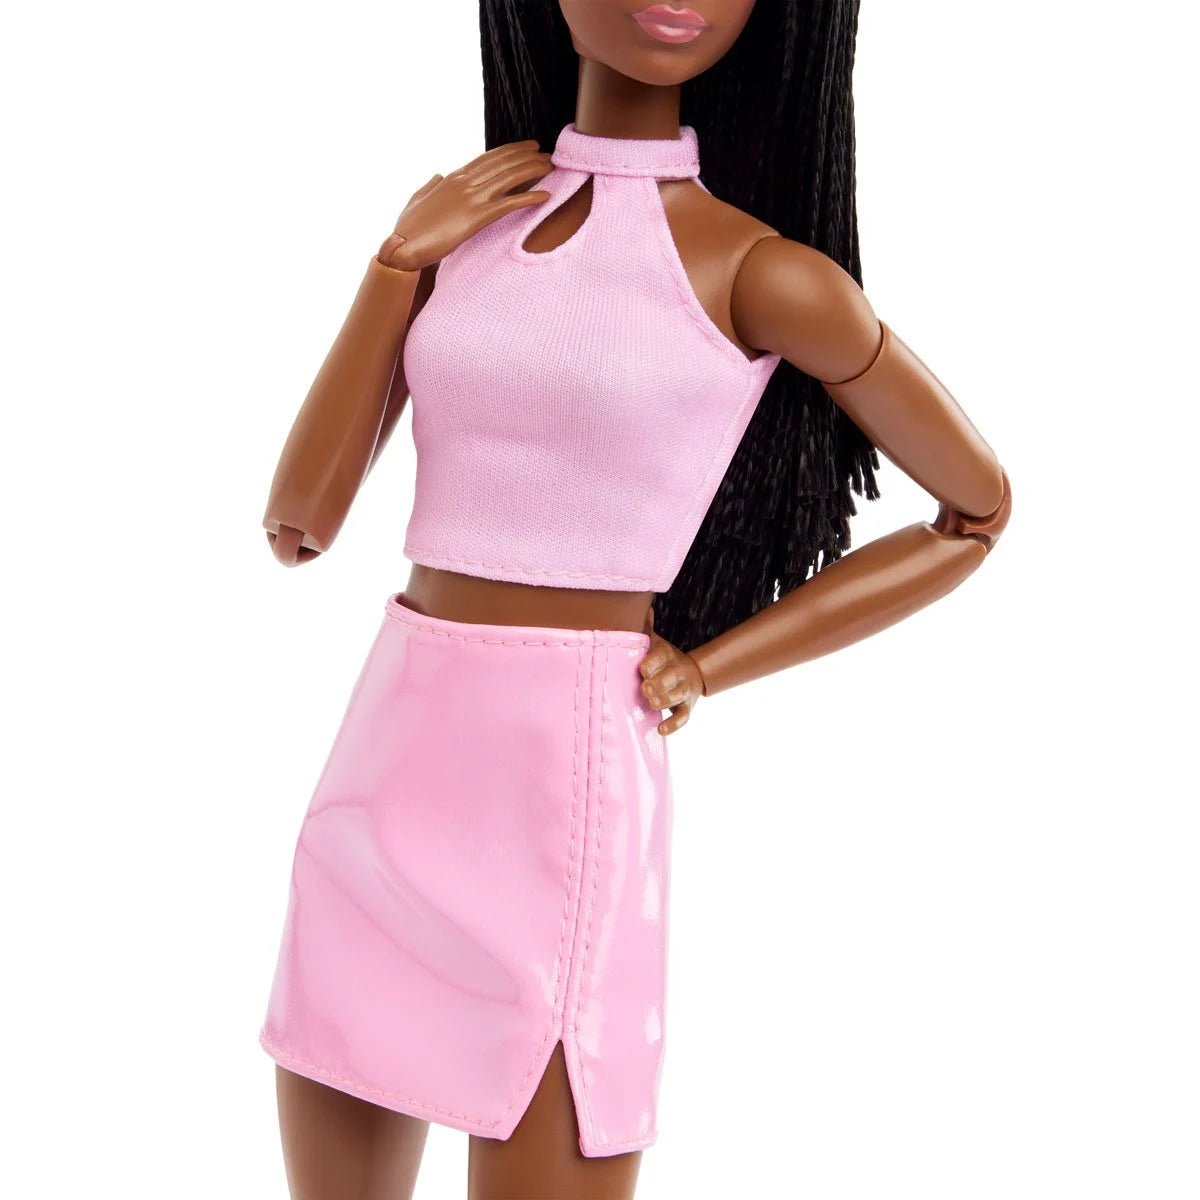 Barbie Signature Barbie Looks Doll #21 (Original, Long Black Hair) - Simon's Collectibles